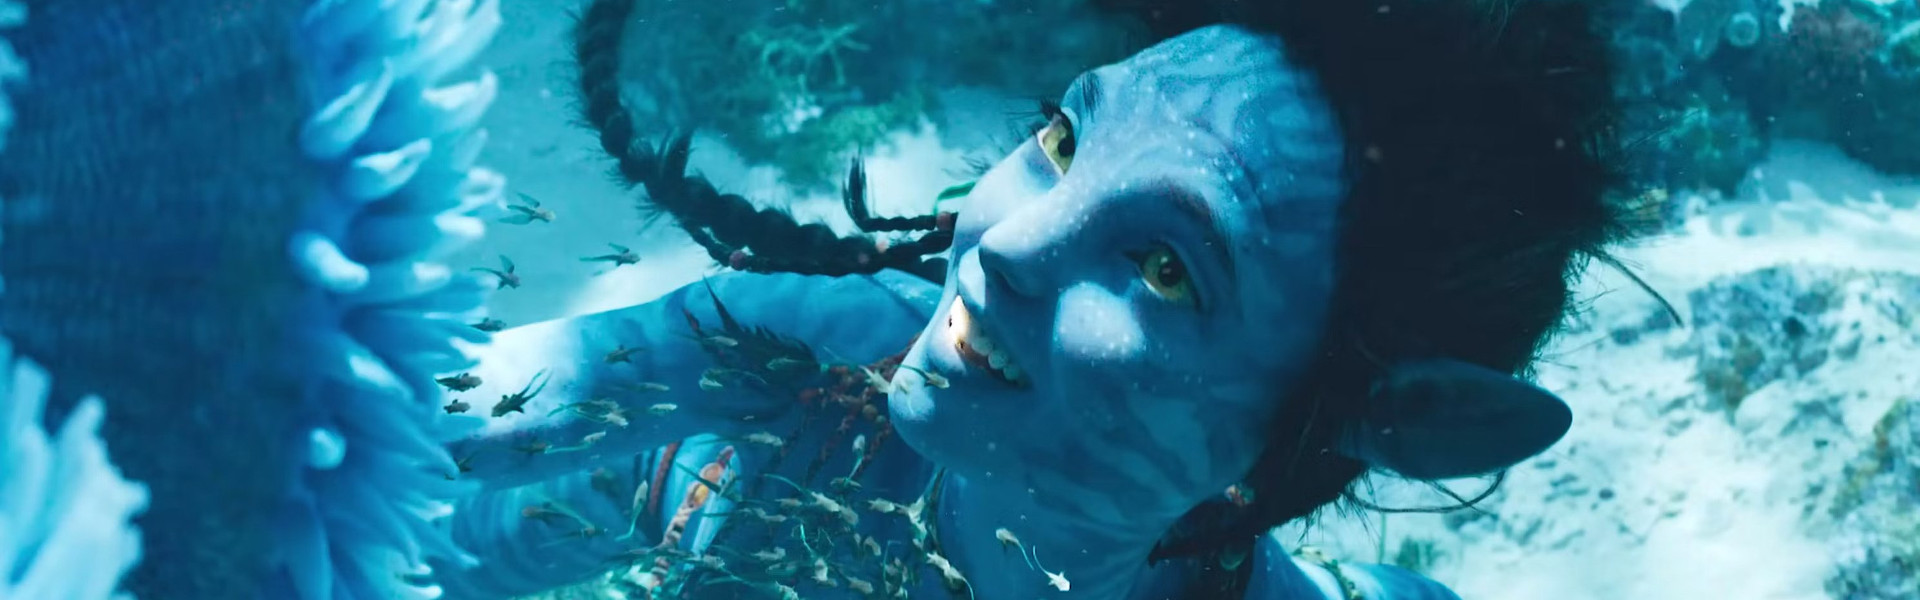 Avatar: Istota wody <span>(dubbing)</span>